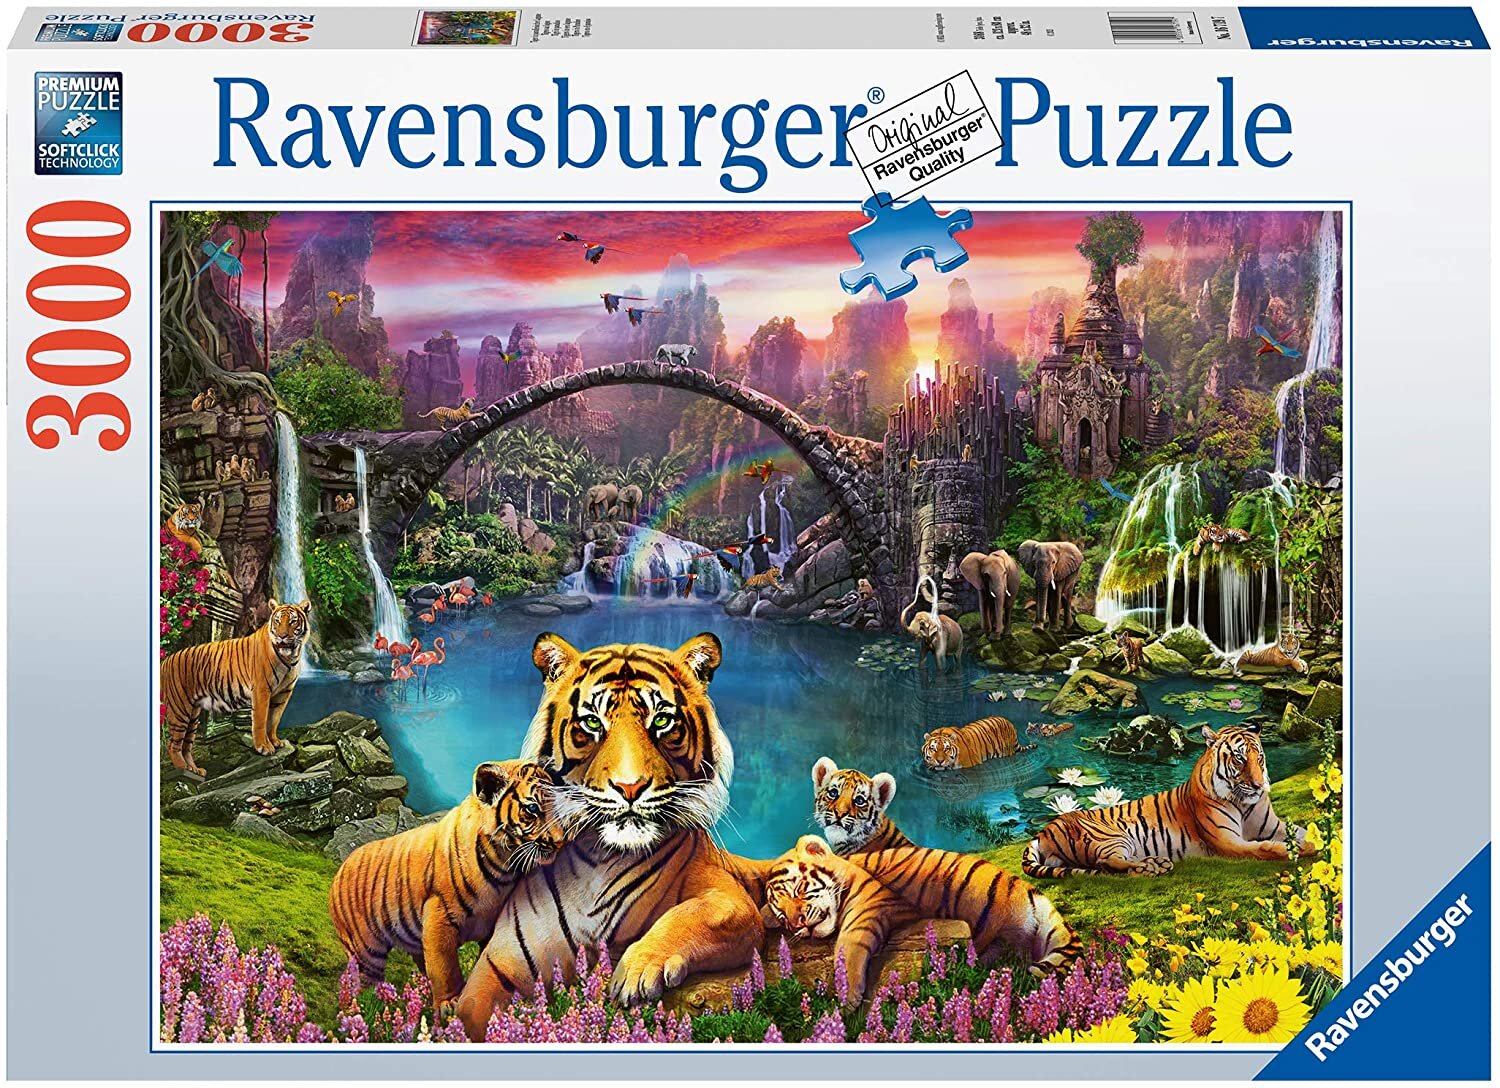 Ravensburger Pussel - Tigrar i paradis lagunen 3000 bitar